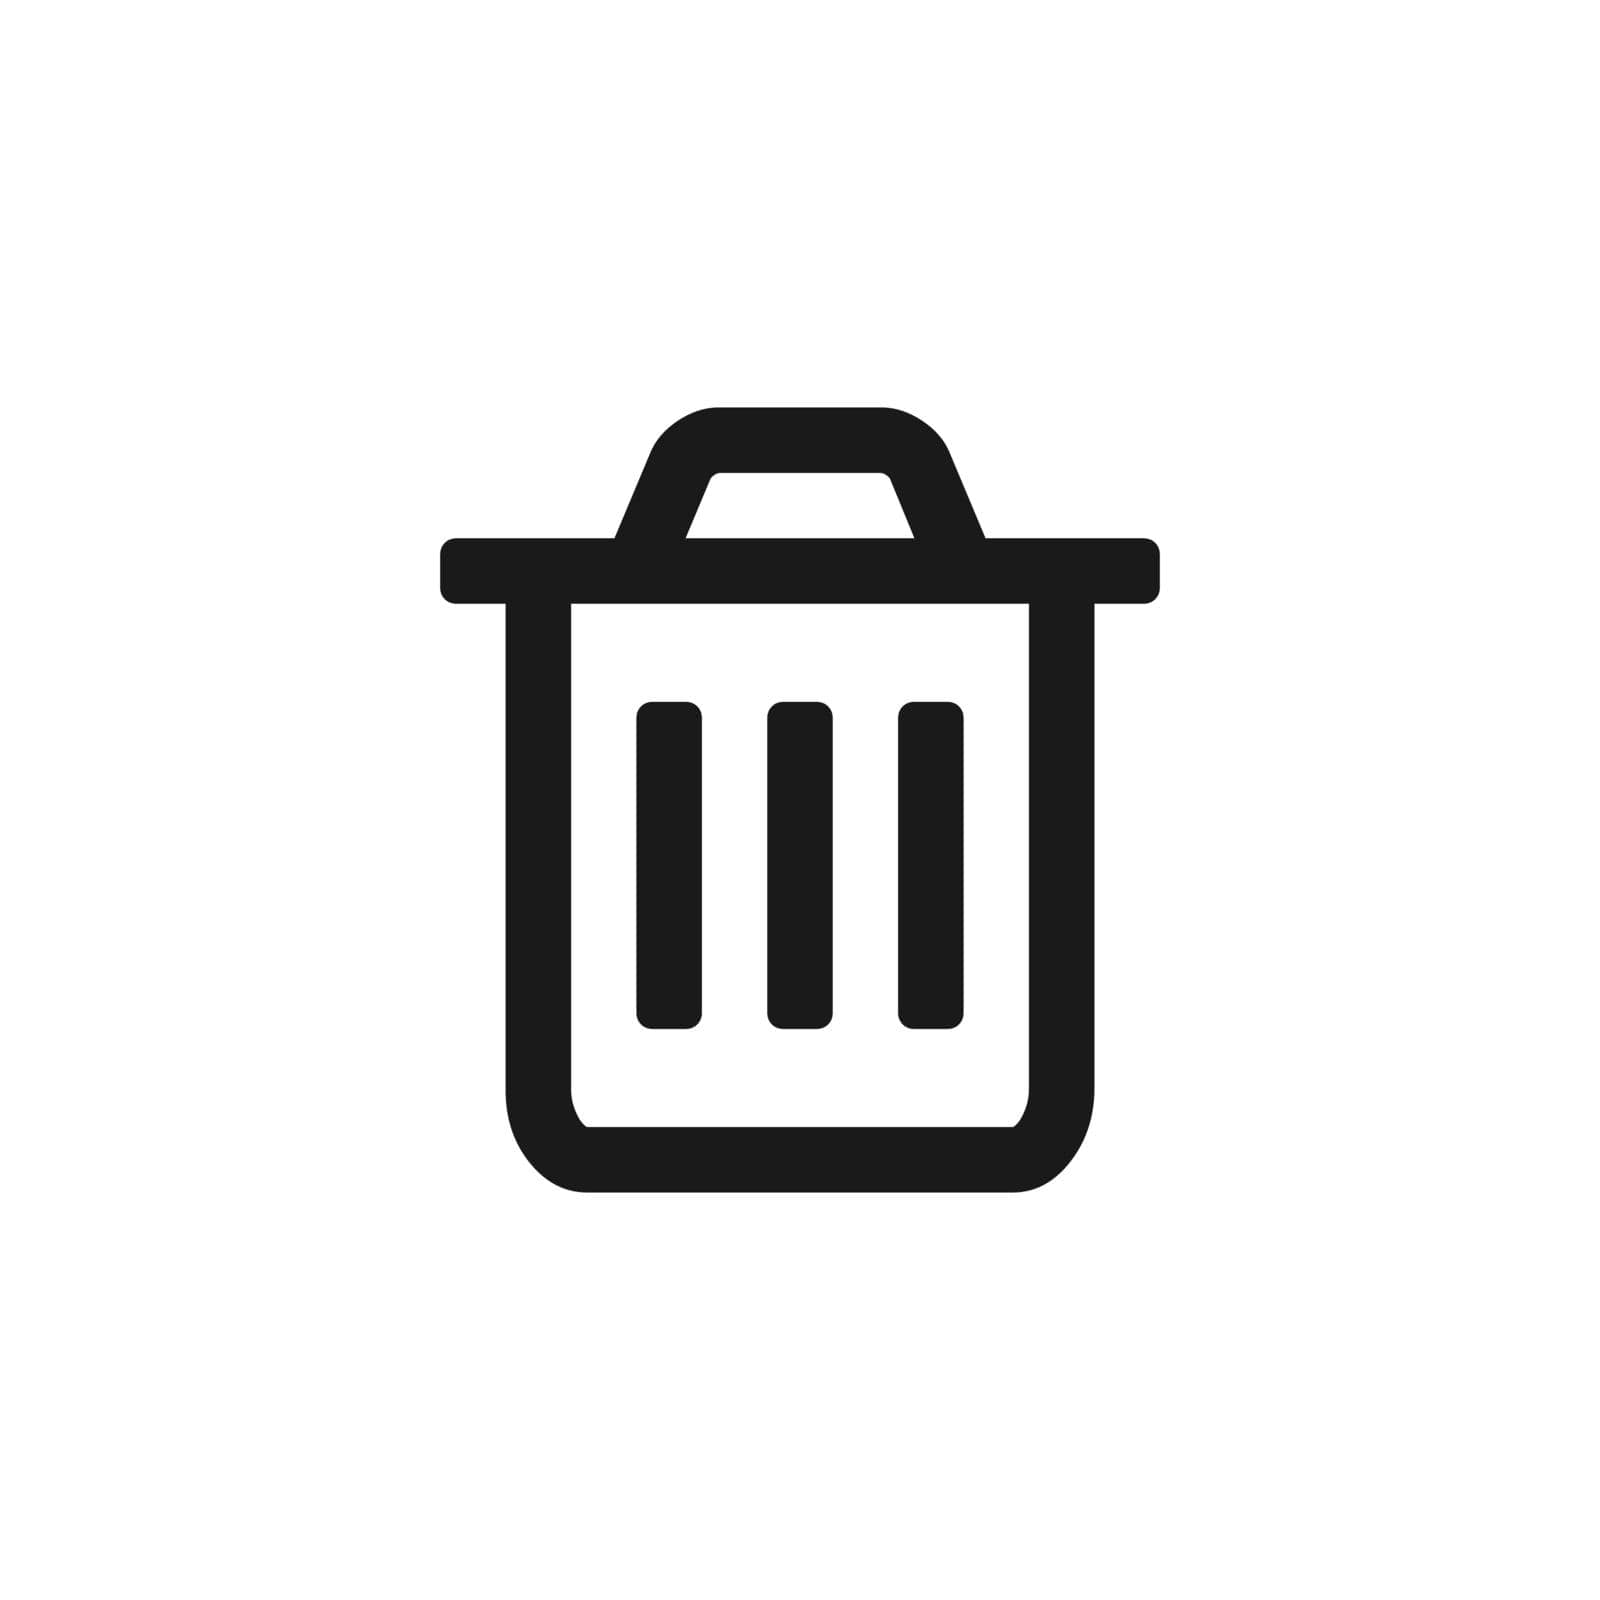 Trash bin vector icon. Trash symbol isolated on white background Vector EPS 10